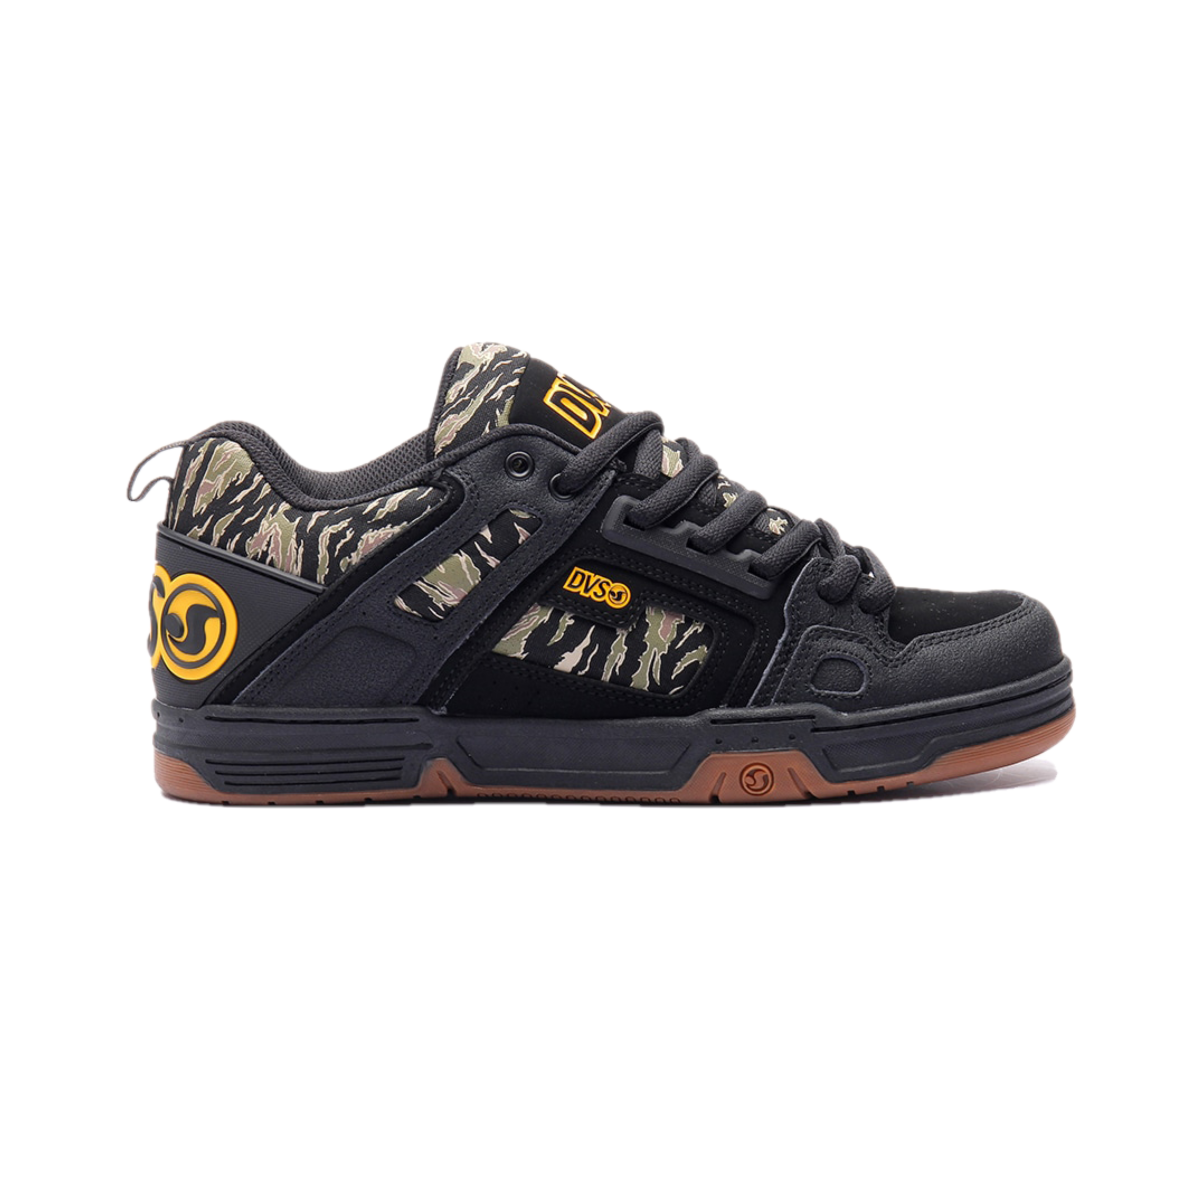 DVS F0000029700 COMANCHE MN'S (Medium) Black/Jungle/Camo Leather & Nubuck Skate Shoes